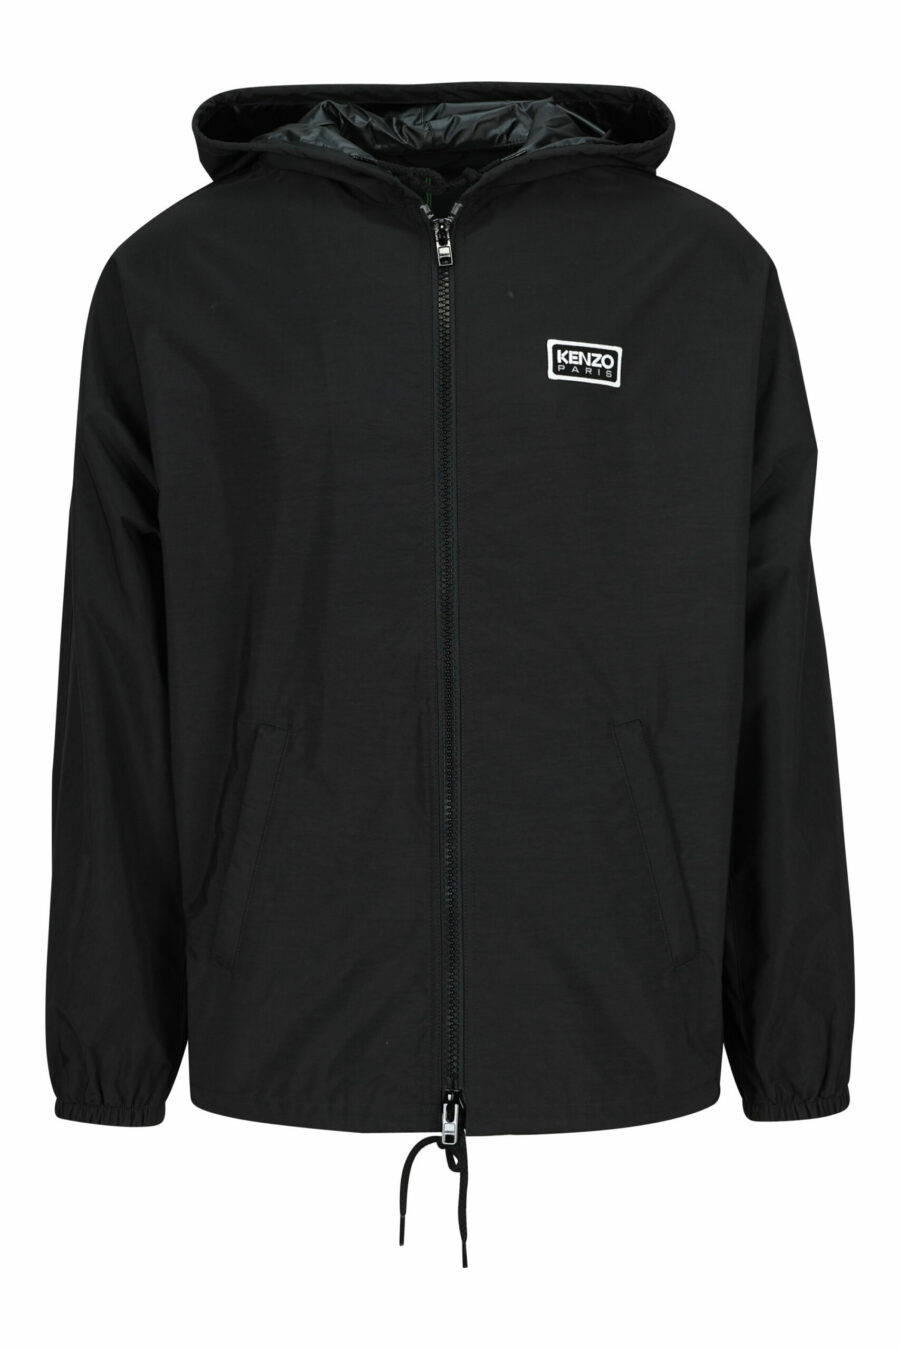 Schwarze Jacke mit Kapuze und Mini-Logo "kenzo tag" - 3612230607057 skaliert